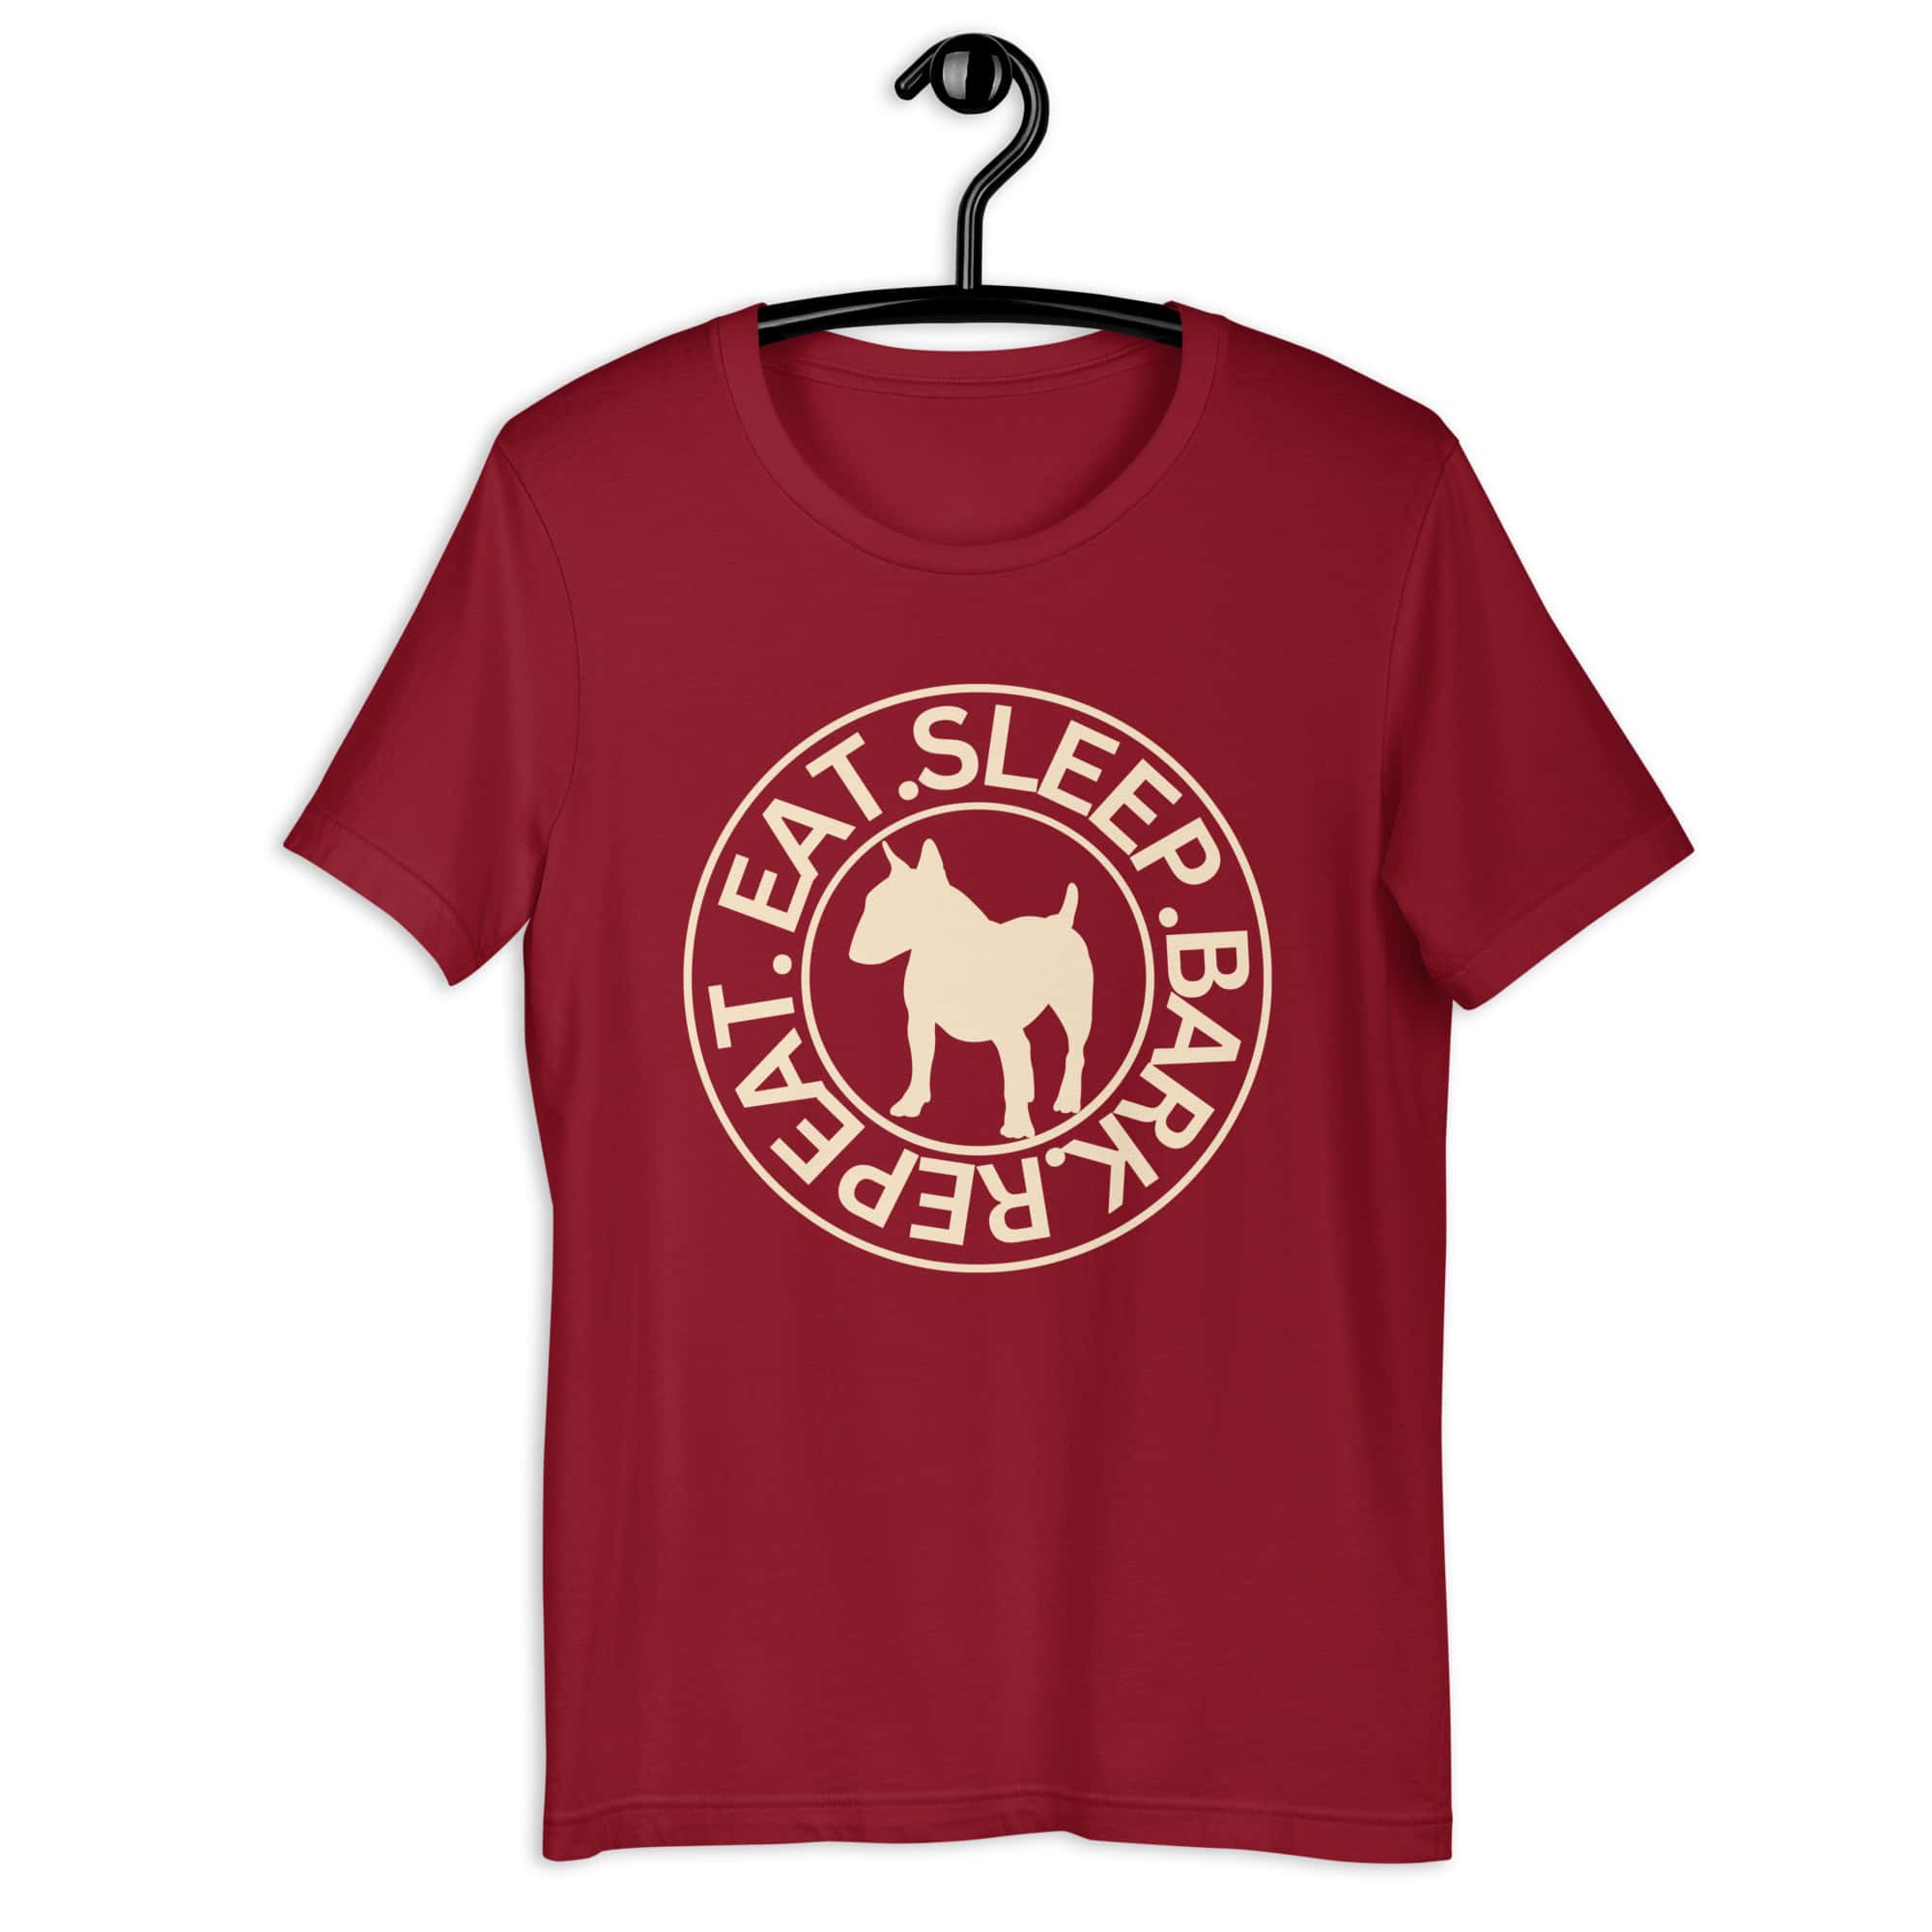 Eat Sleep Bark Repeat Bull Terrier Unisex T-Shirt. Cardinal